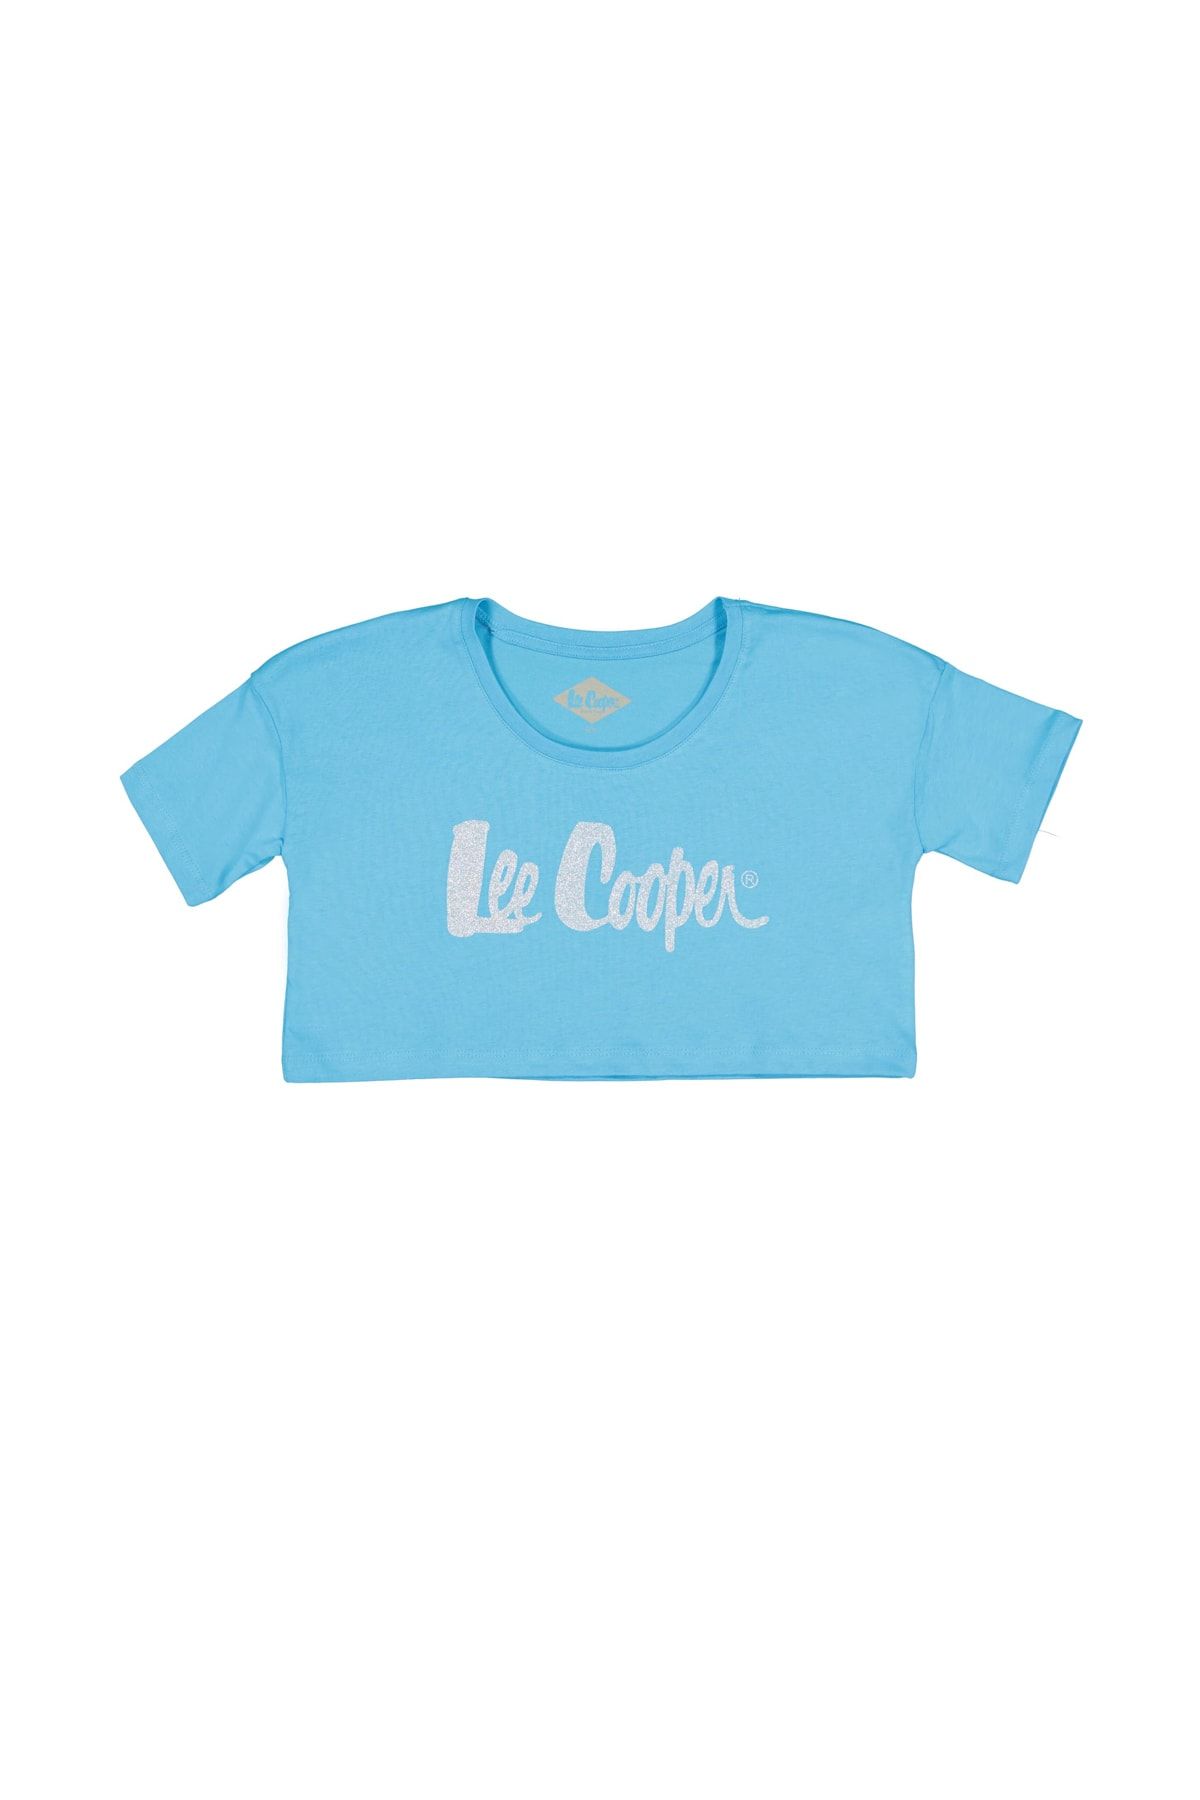 Lee Cooper Tally Kız Çocuk Bisiklet Yaka T-shirt Turkuaz